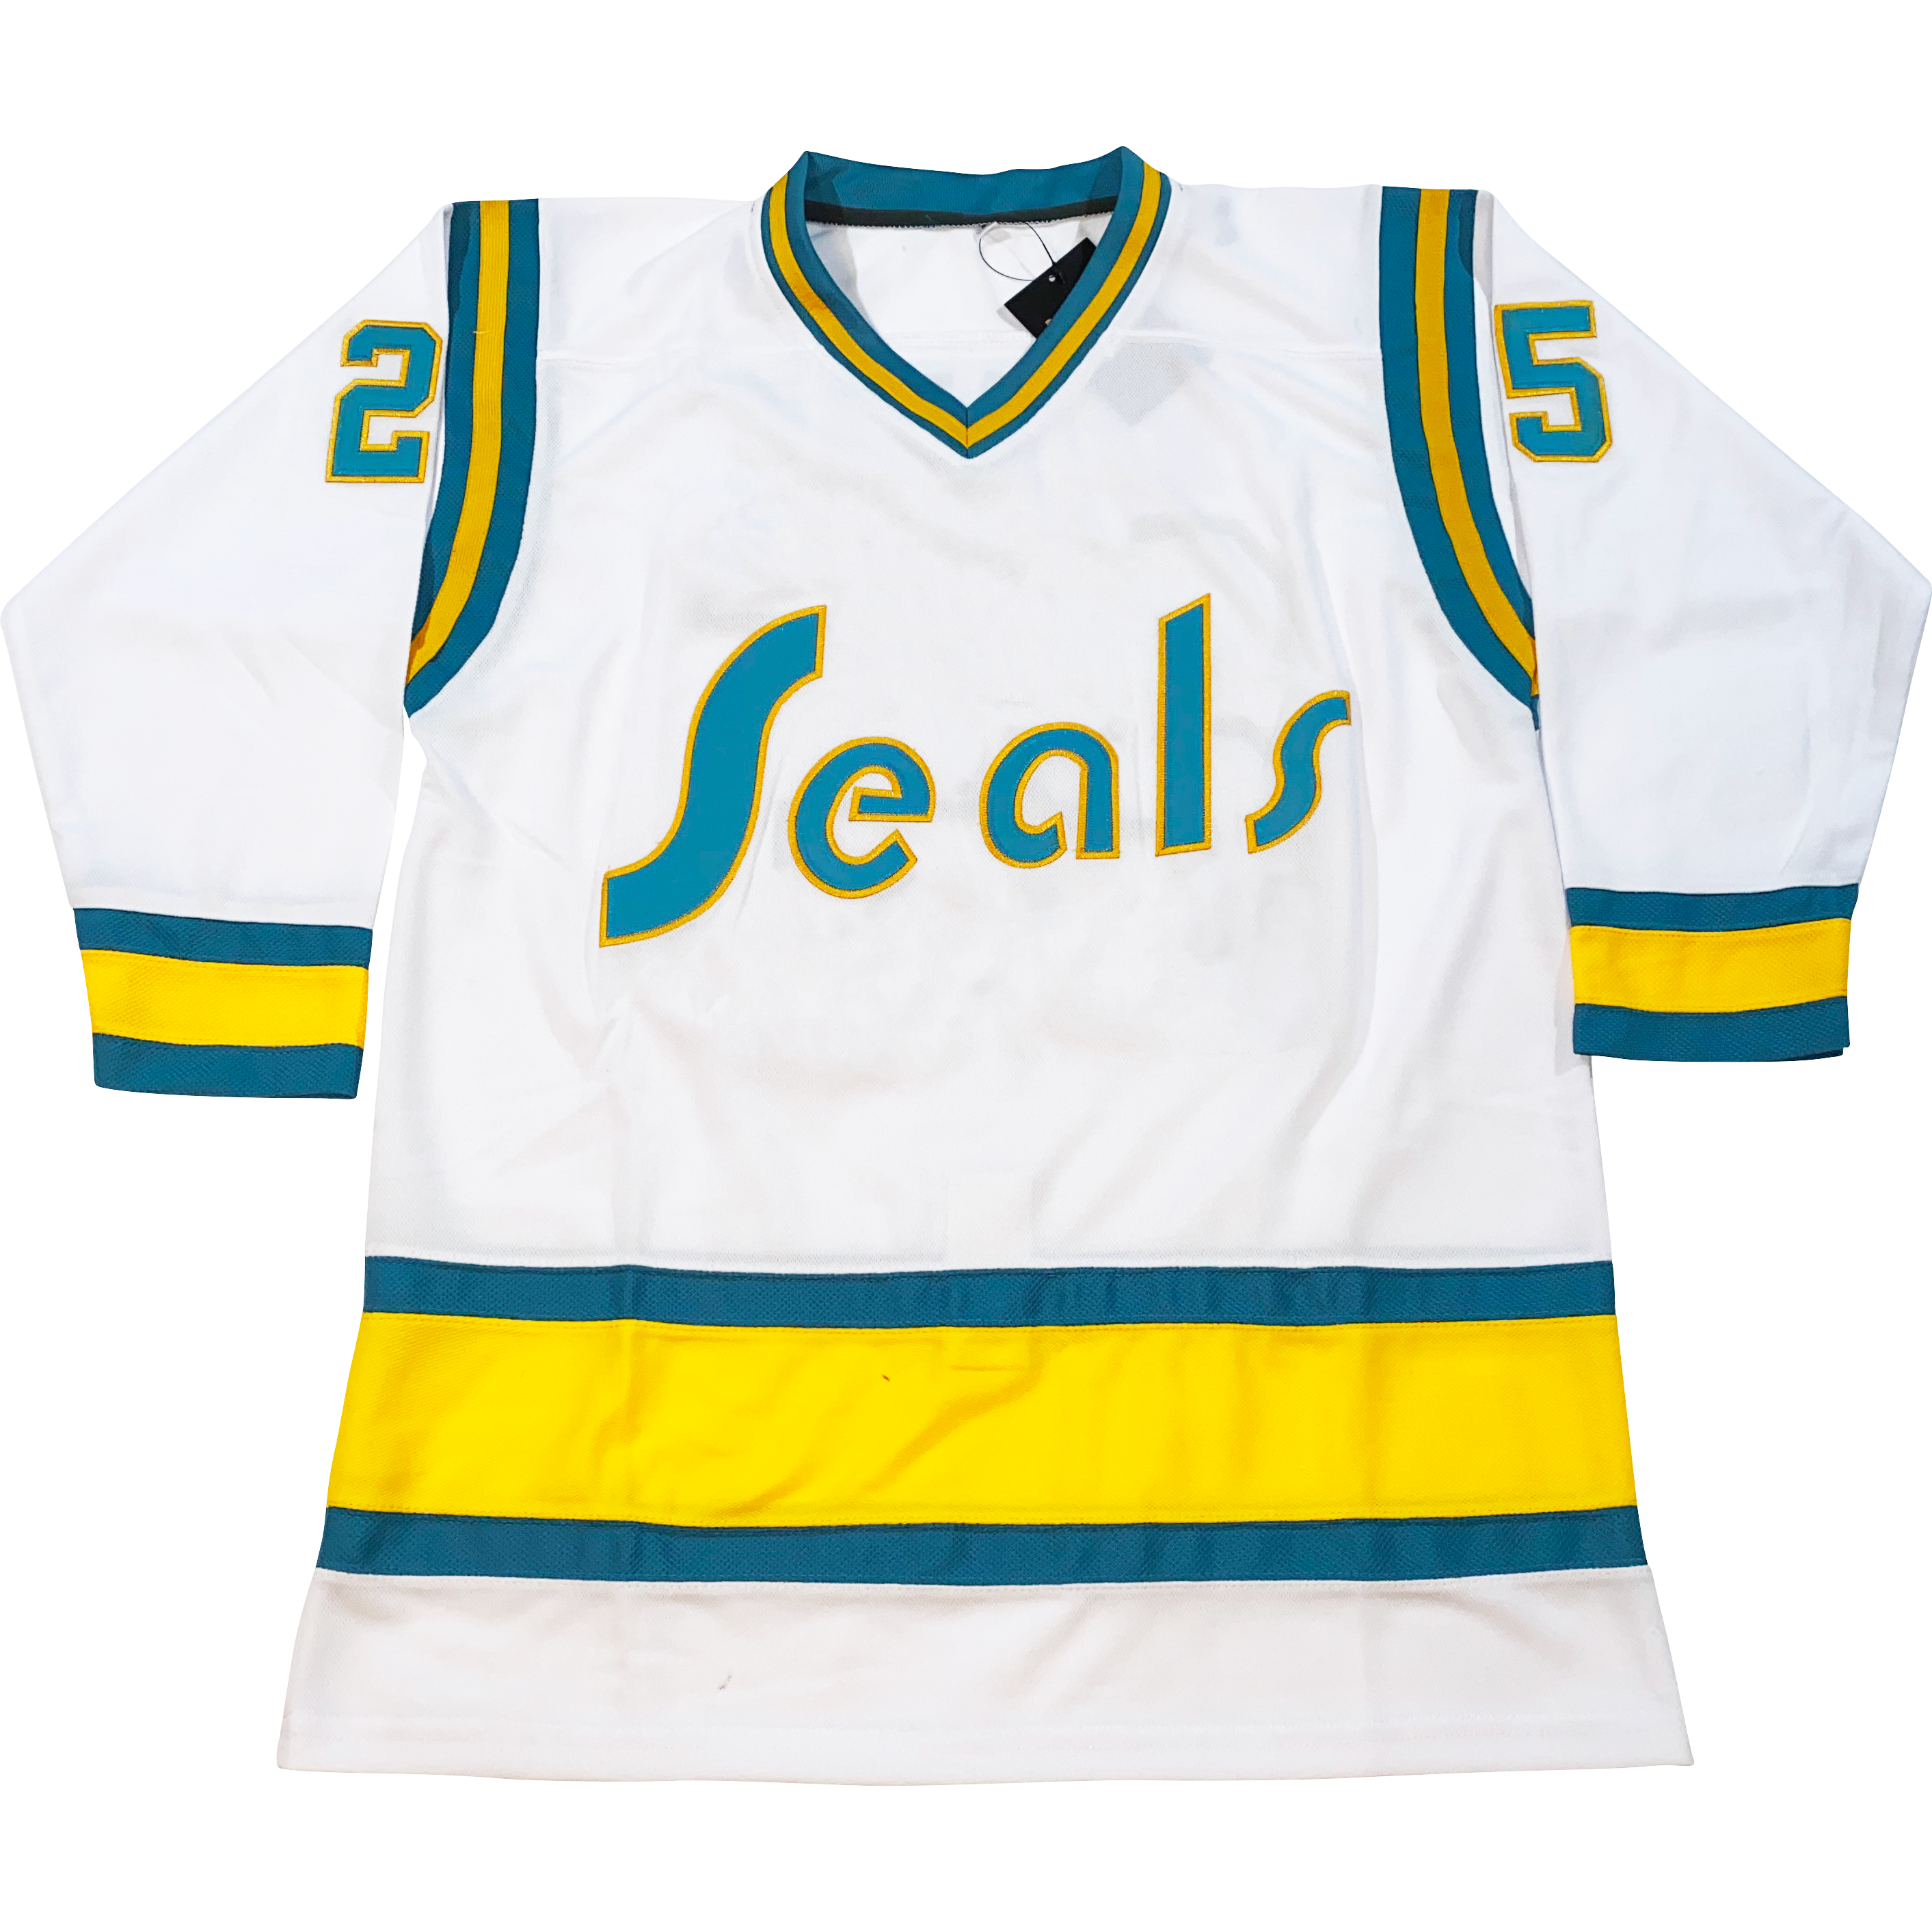 File:California Golden Seals jersey at IHHOF.JPG - Wikipedia